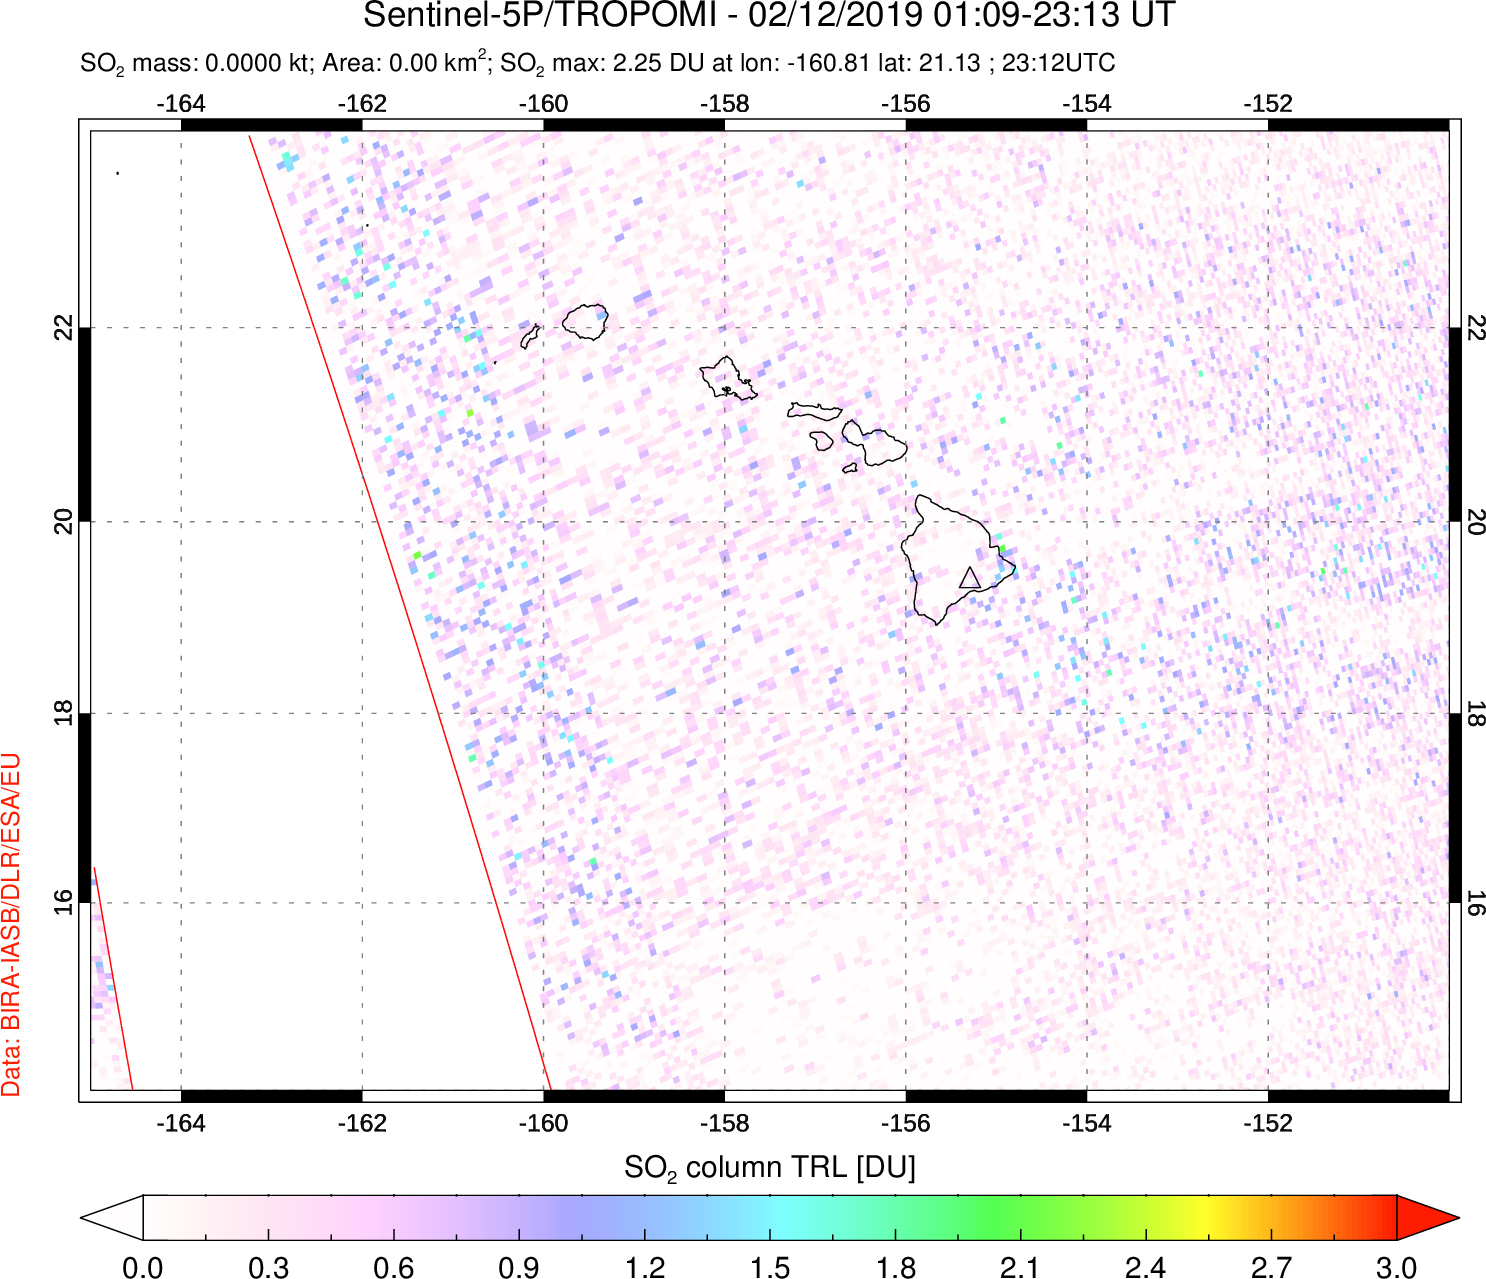 A sulfur dioxide image over Hawaii, USA on Feb 12, 2019.